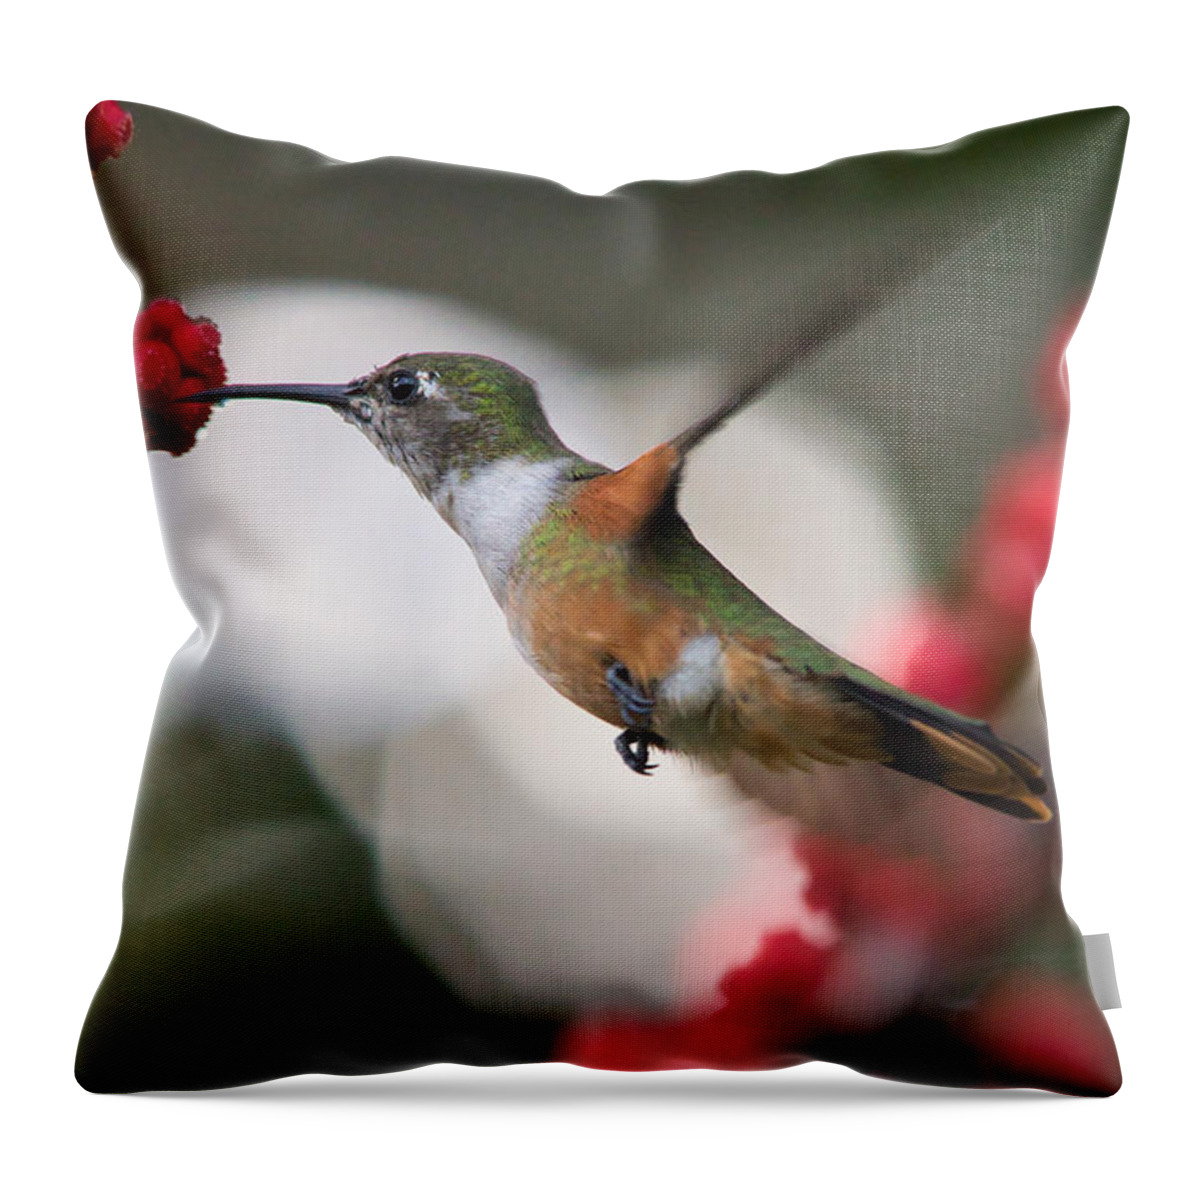 Hummingbird Throw Pillow featuring the photograph Humming Bird taking a sip of nectar by Montez Kerr